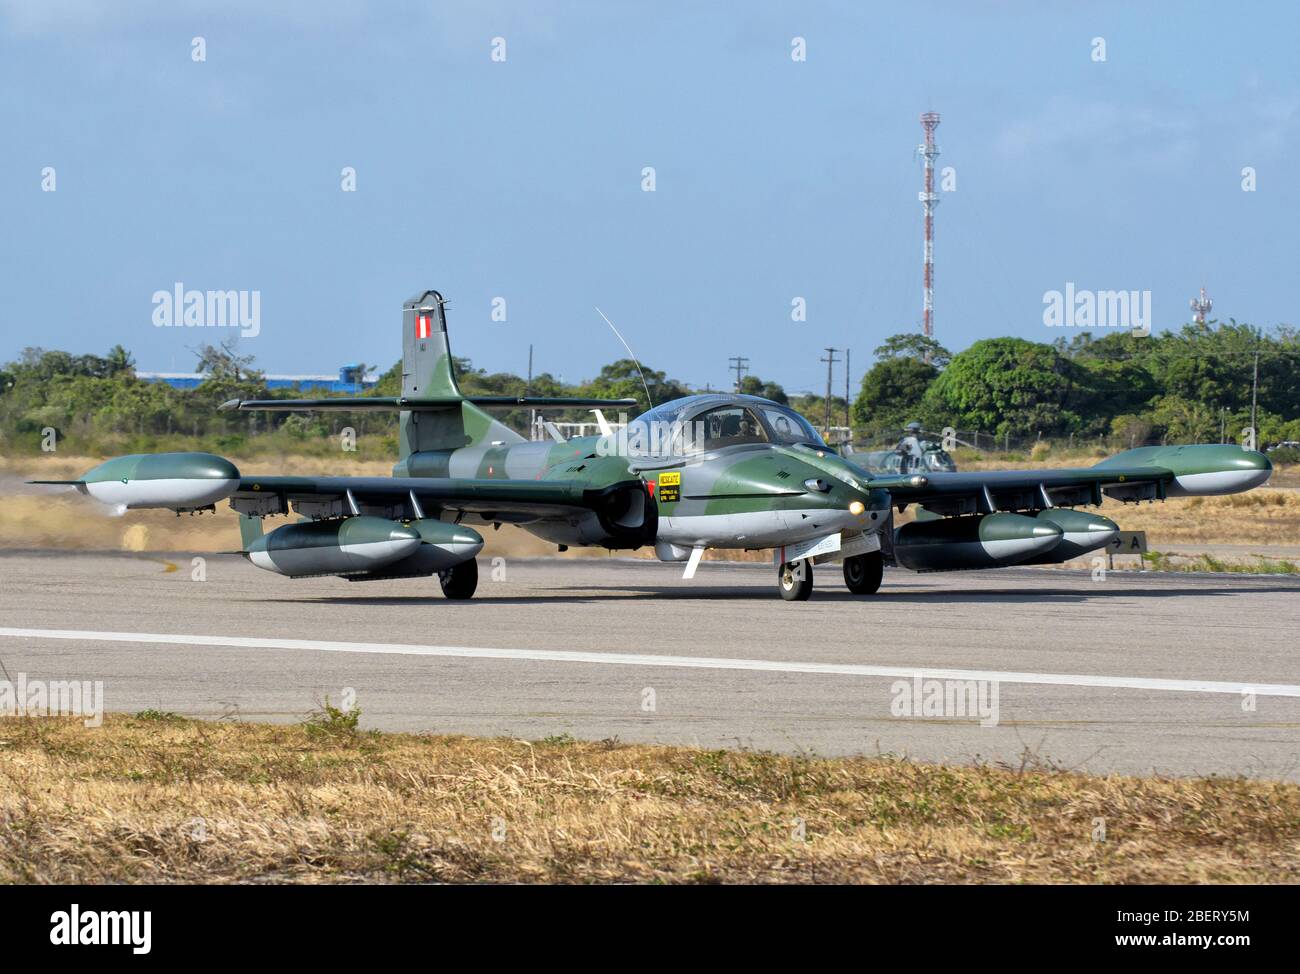 Peruvian Air Force A-37 attack aircraft. Stock Photo